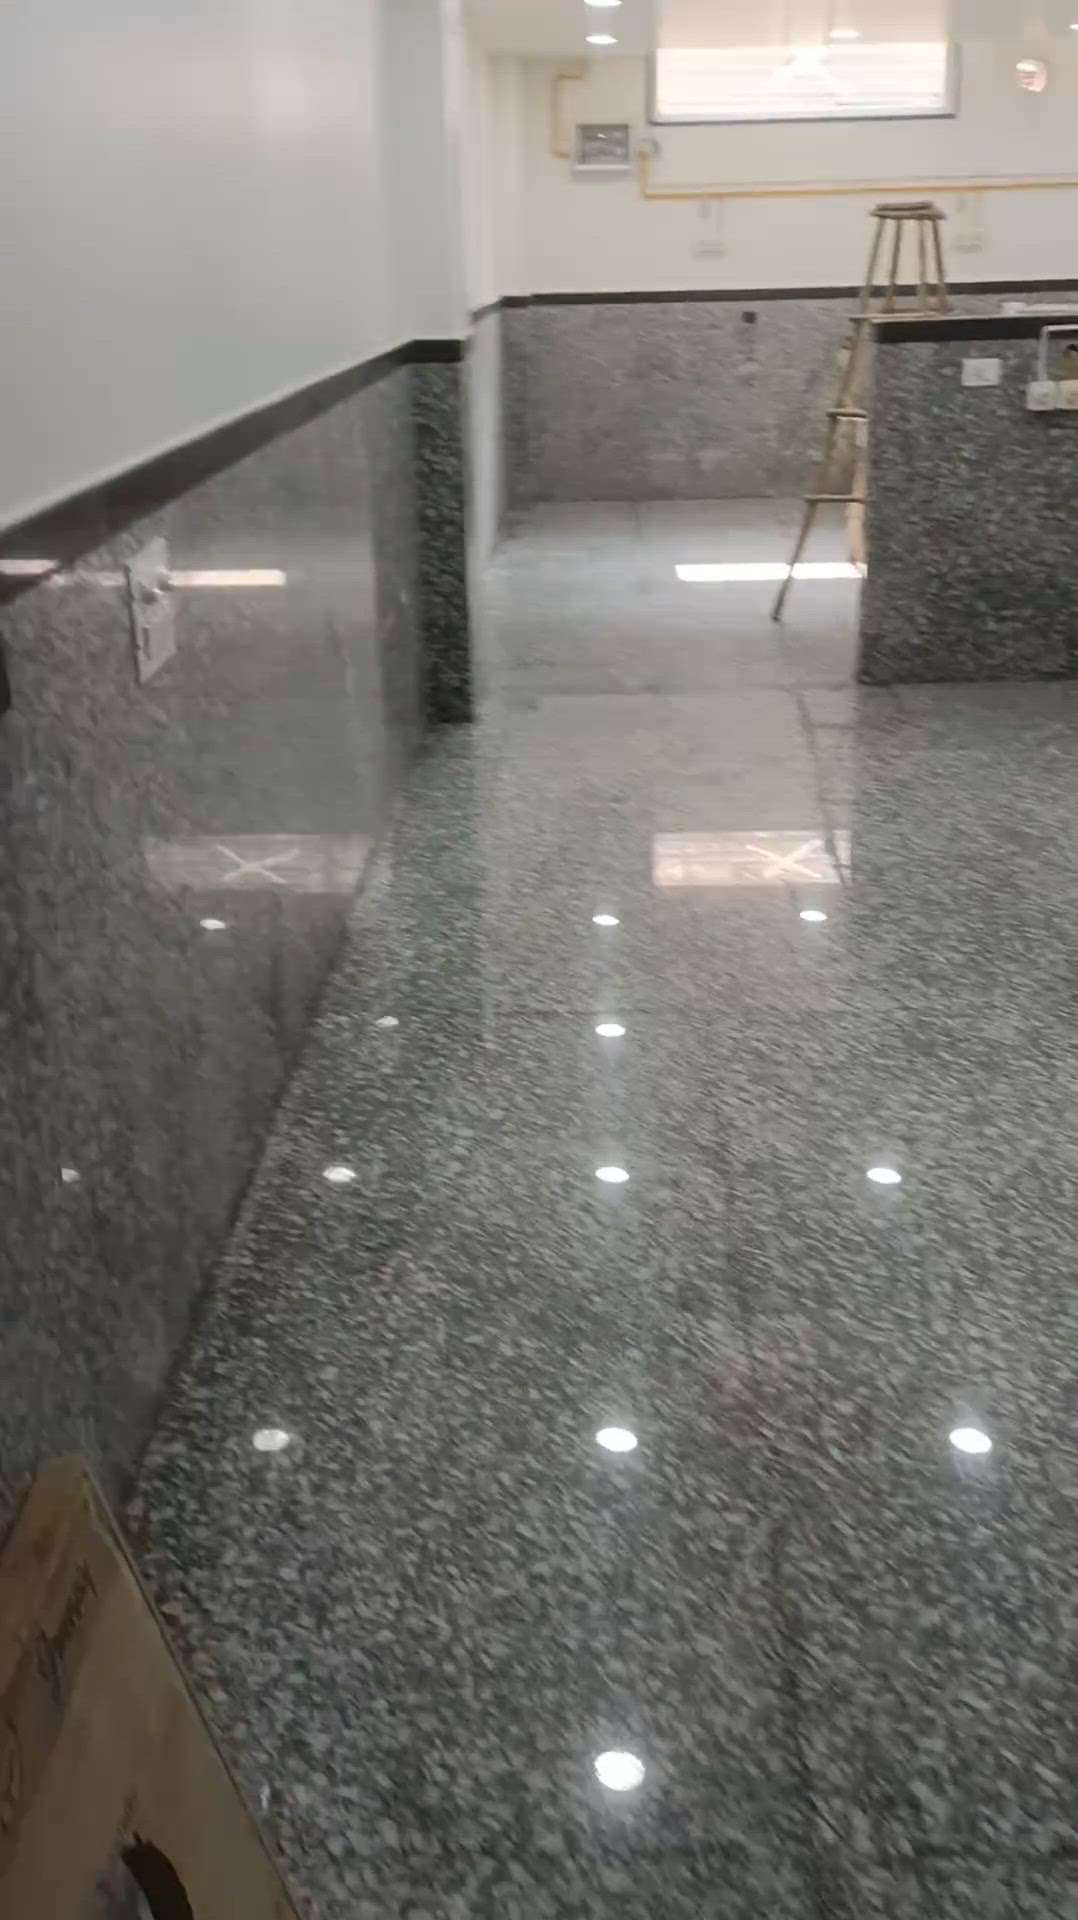 #GraniteFloors  #Granites  #FlooringTiles  #BathroomTIles  #JKGypsum